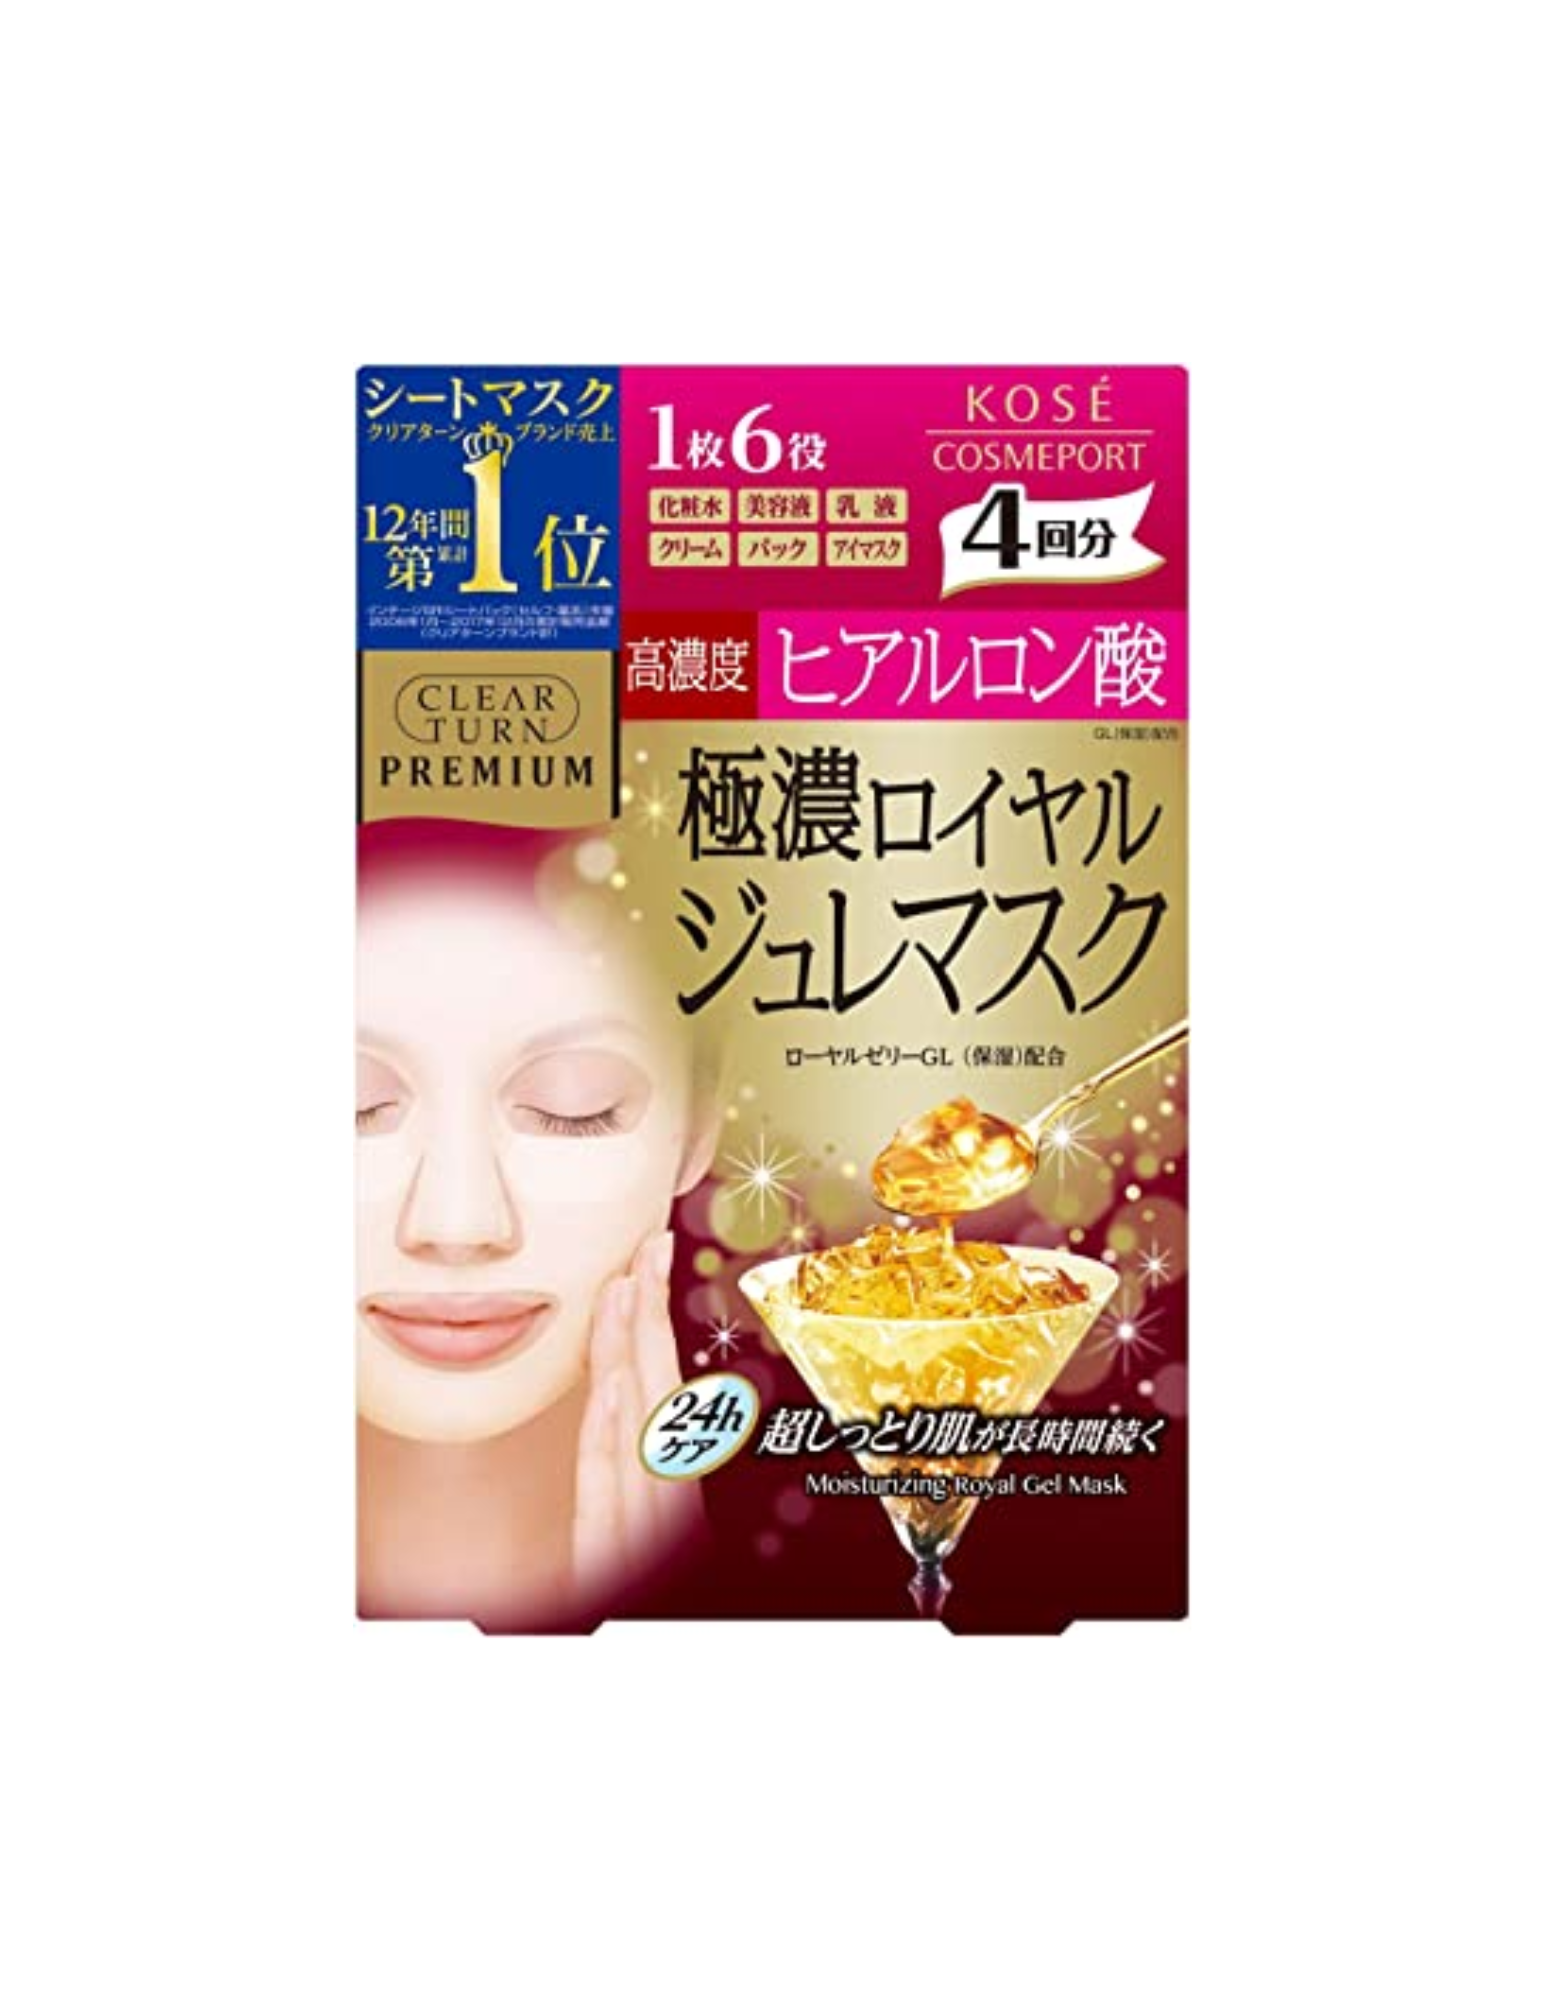 Kose Clear Turn Premium Royal Jelly Mask | Moisturizing